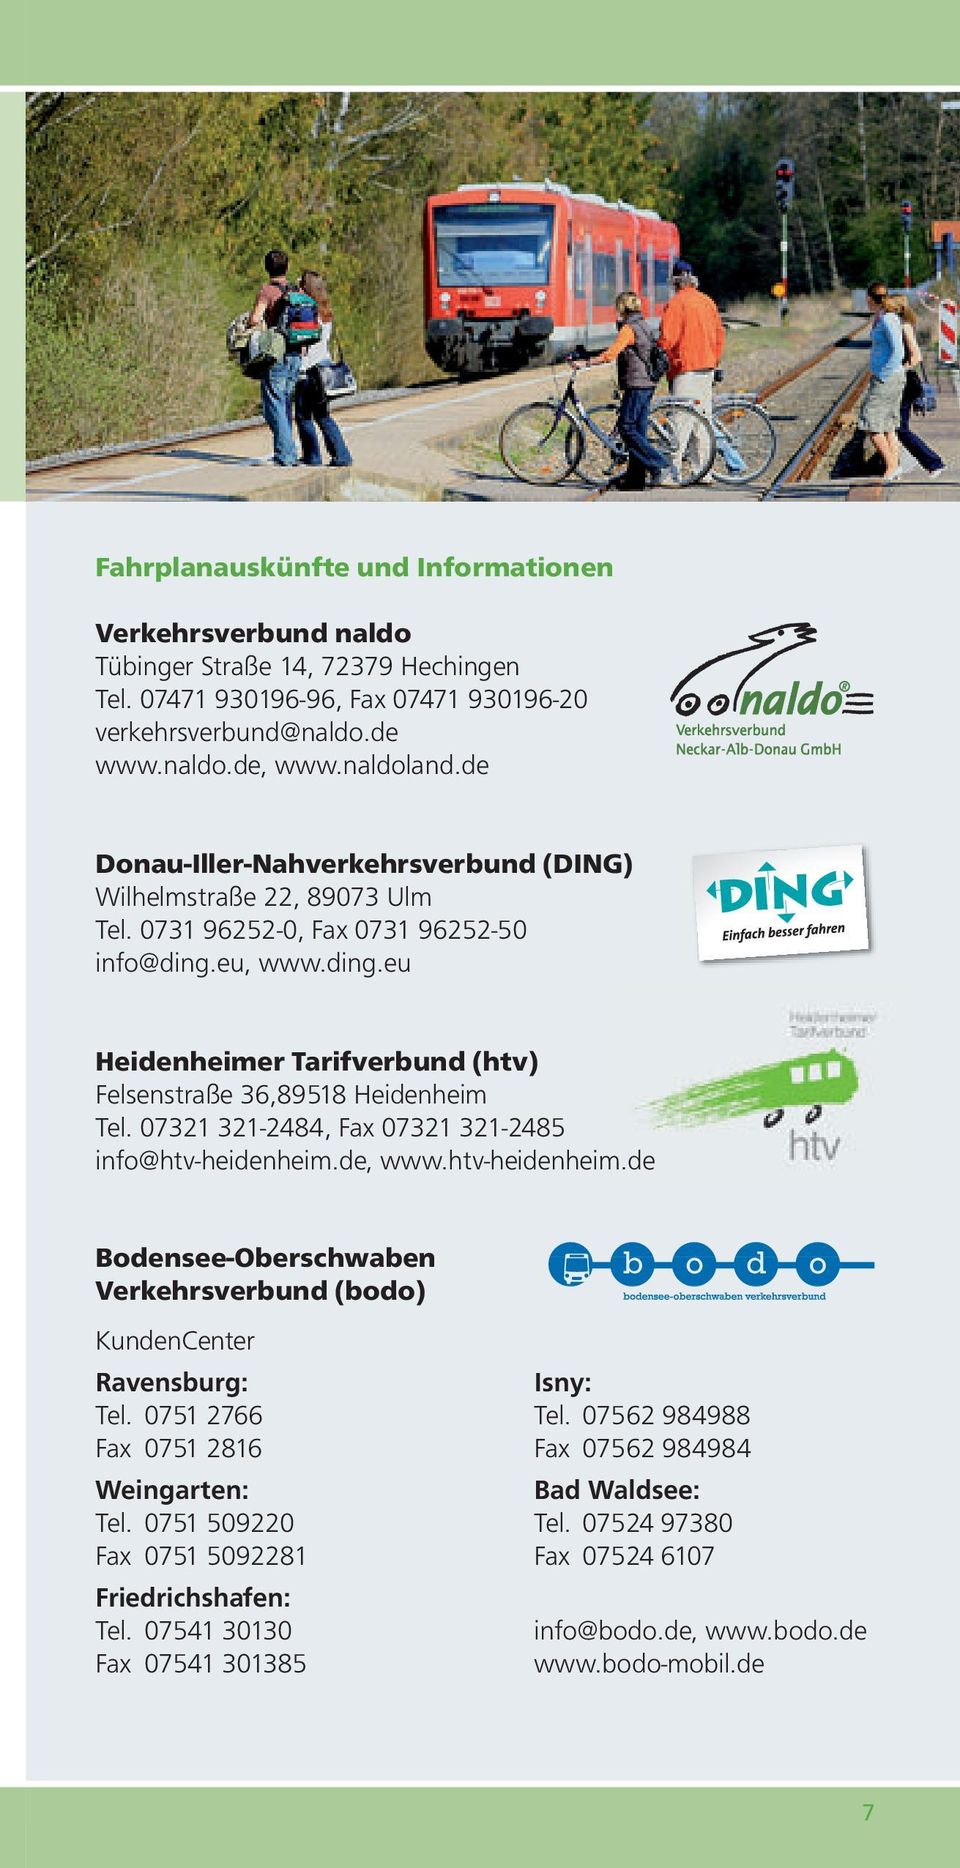 07321 321-2484, Fax 07321 321-2485 info@htv-heidenheim.de, www.htv-heidenheim.de Bodensee-Oberschwaben Verkehrsverbund (bodo) KundenCenter Ravensburg: Tel. 0751 2766 Fax 0751 2816 Weingarten: Tel.